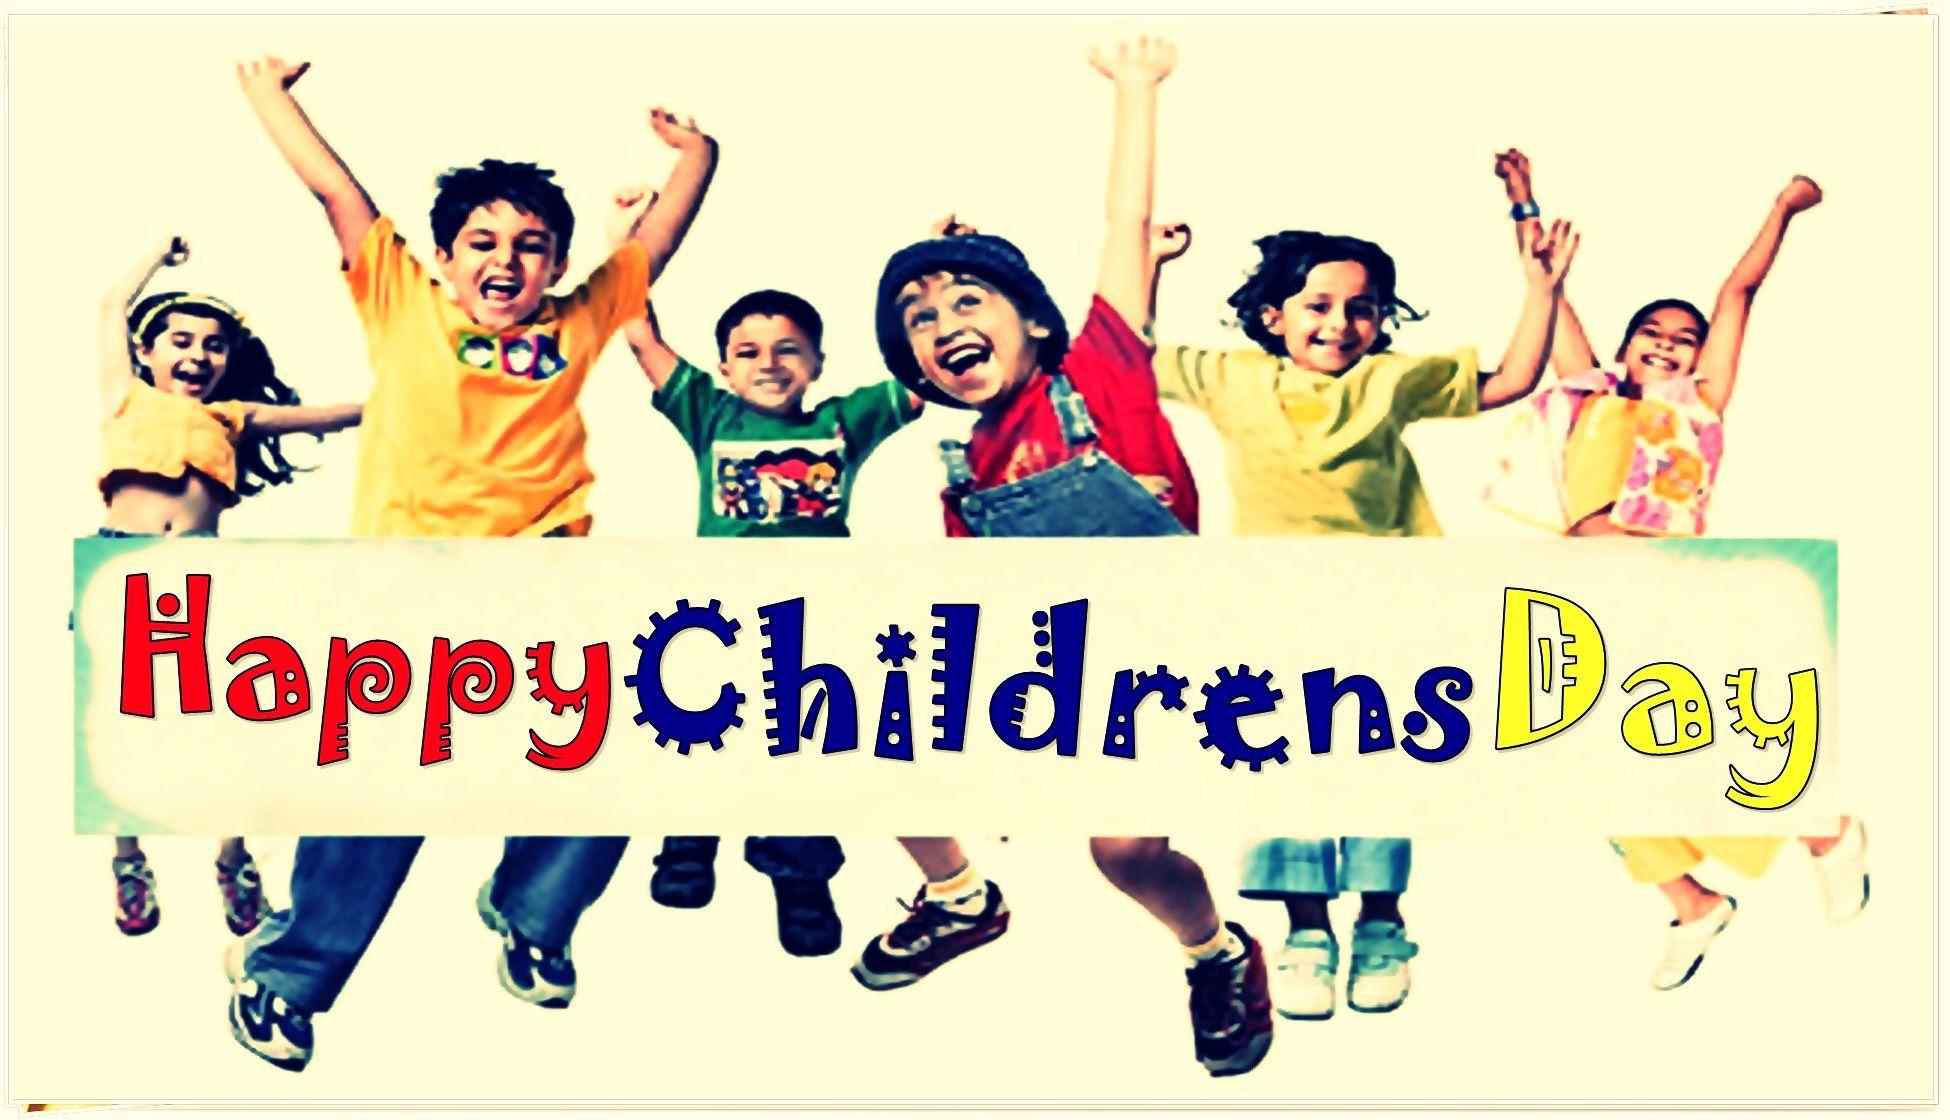 Happy Children's Day: Awaken the Child in You